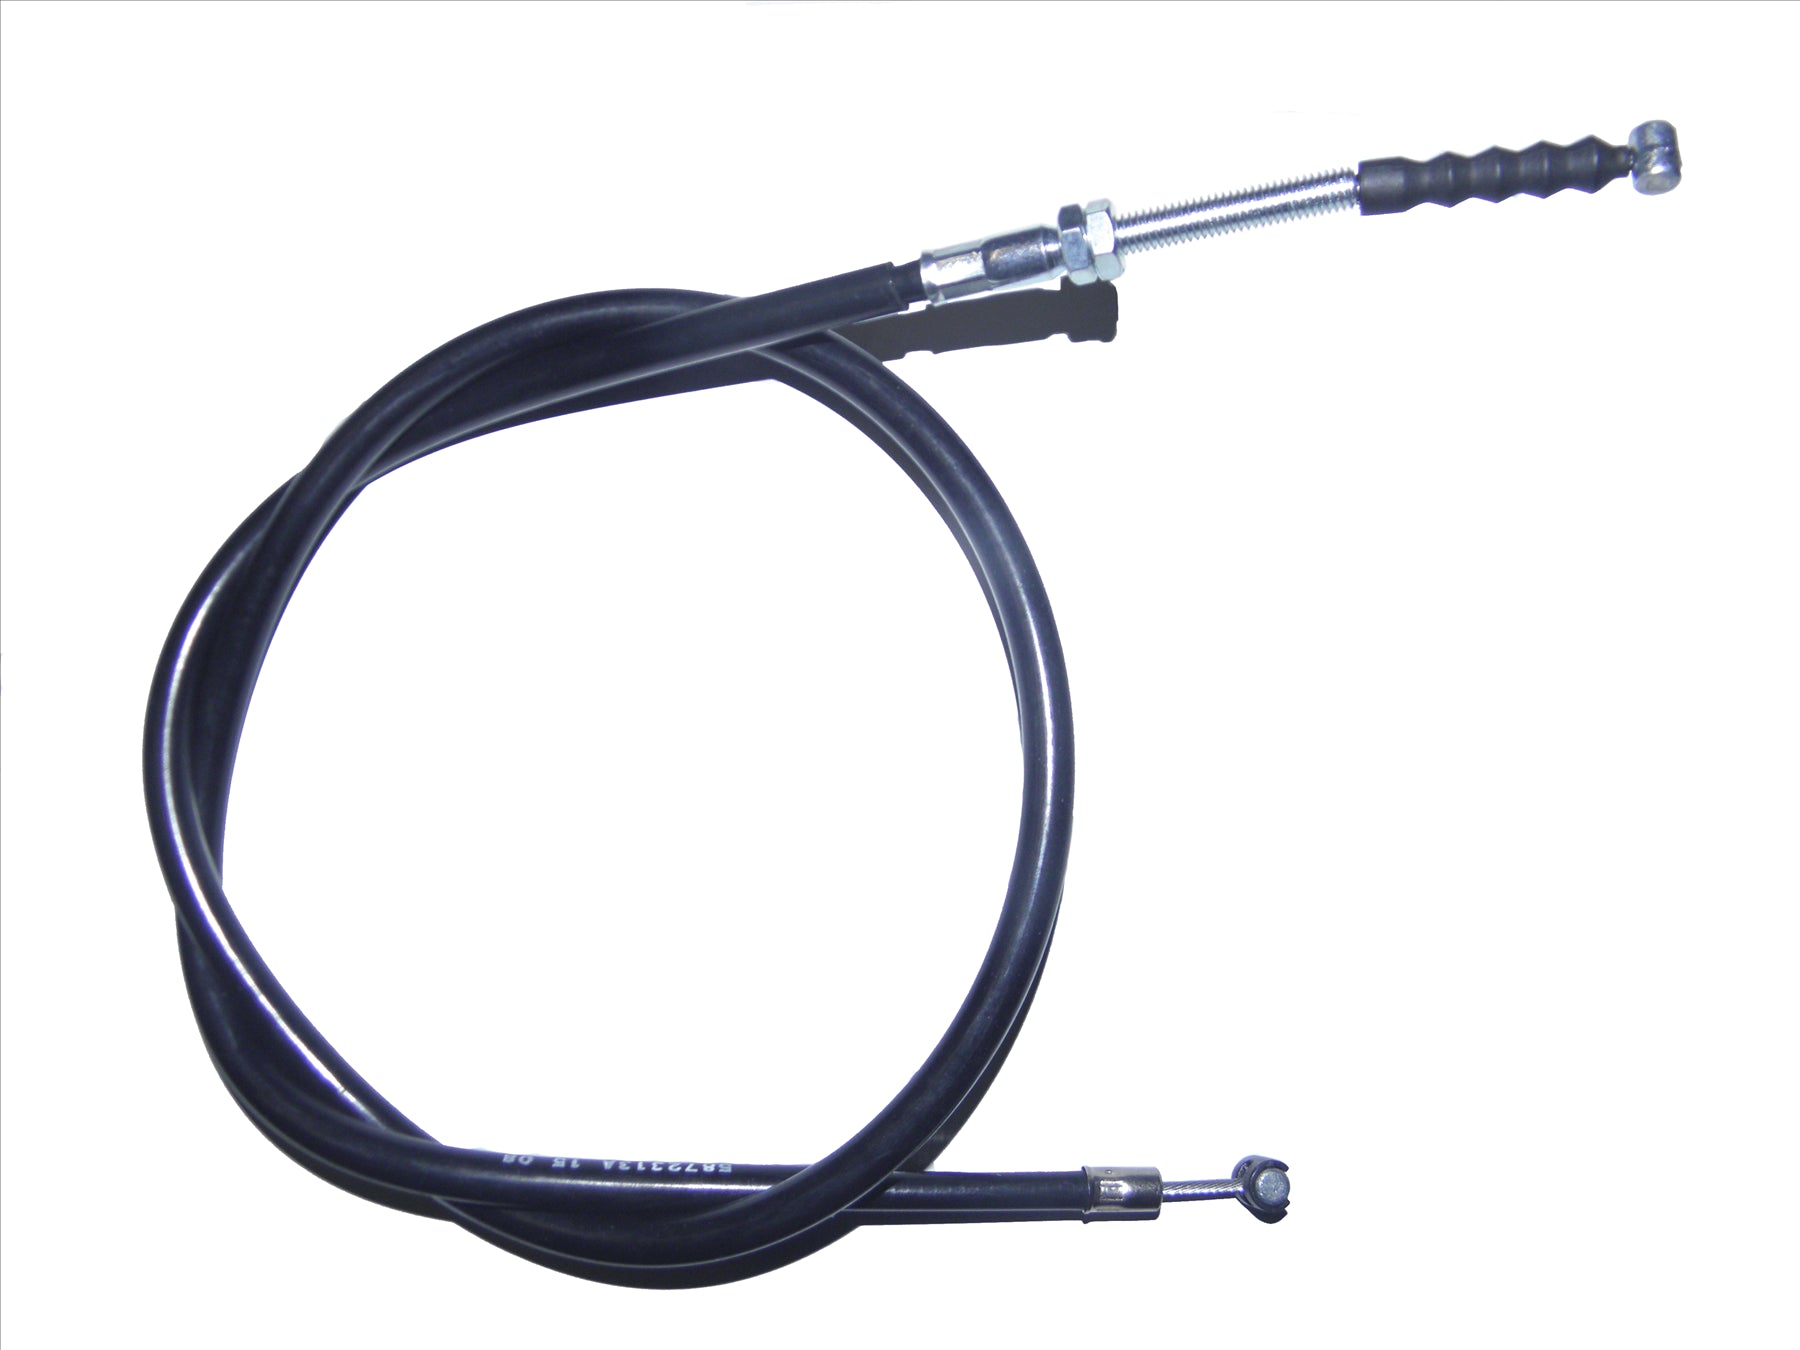 Apico Black Clutch Cable For Kawasaki KX 65 2000-2019